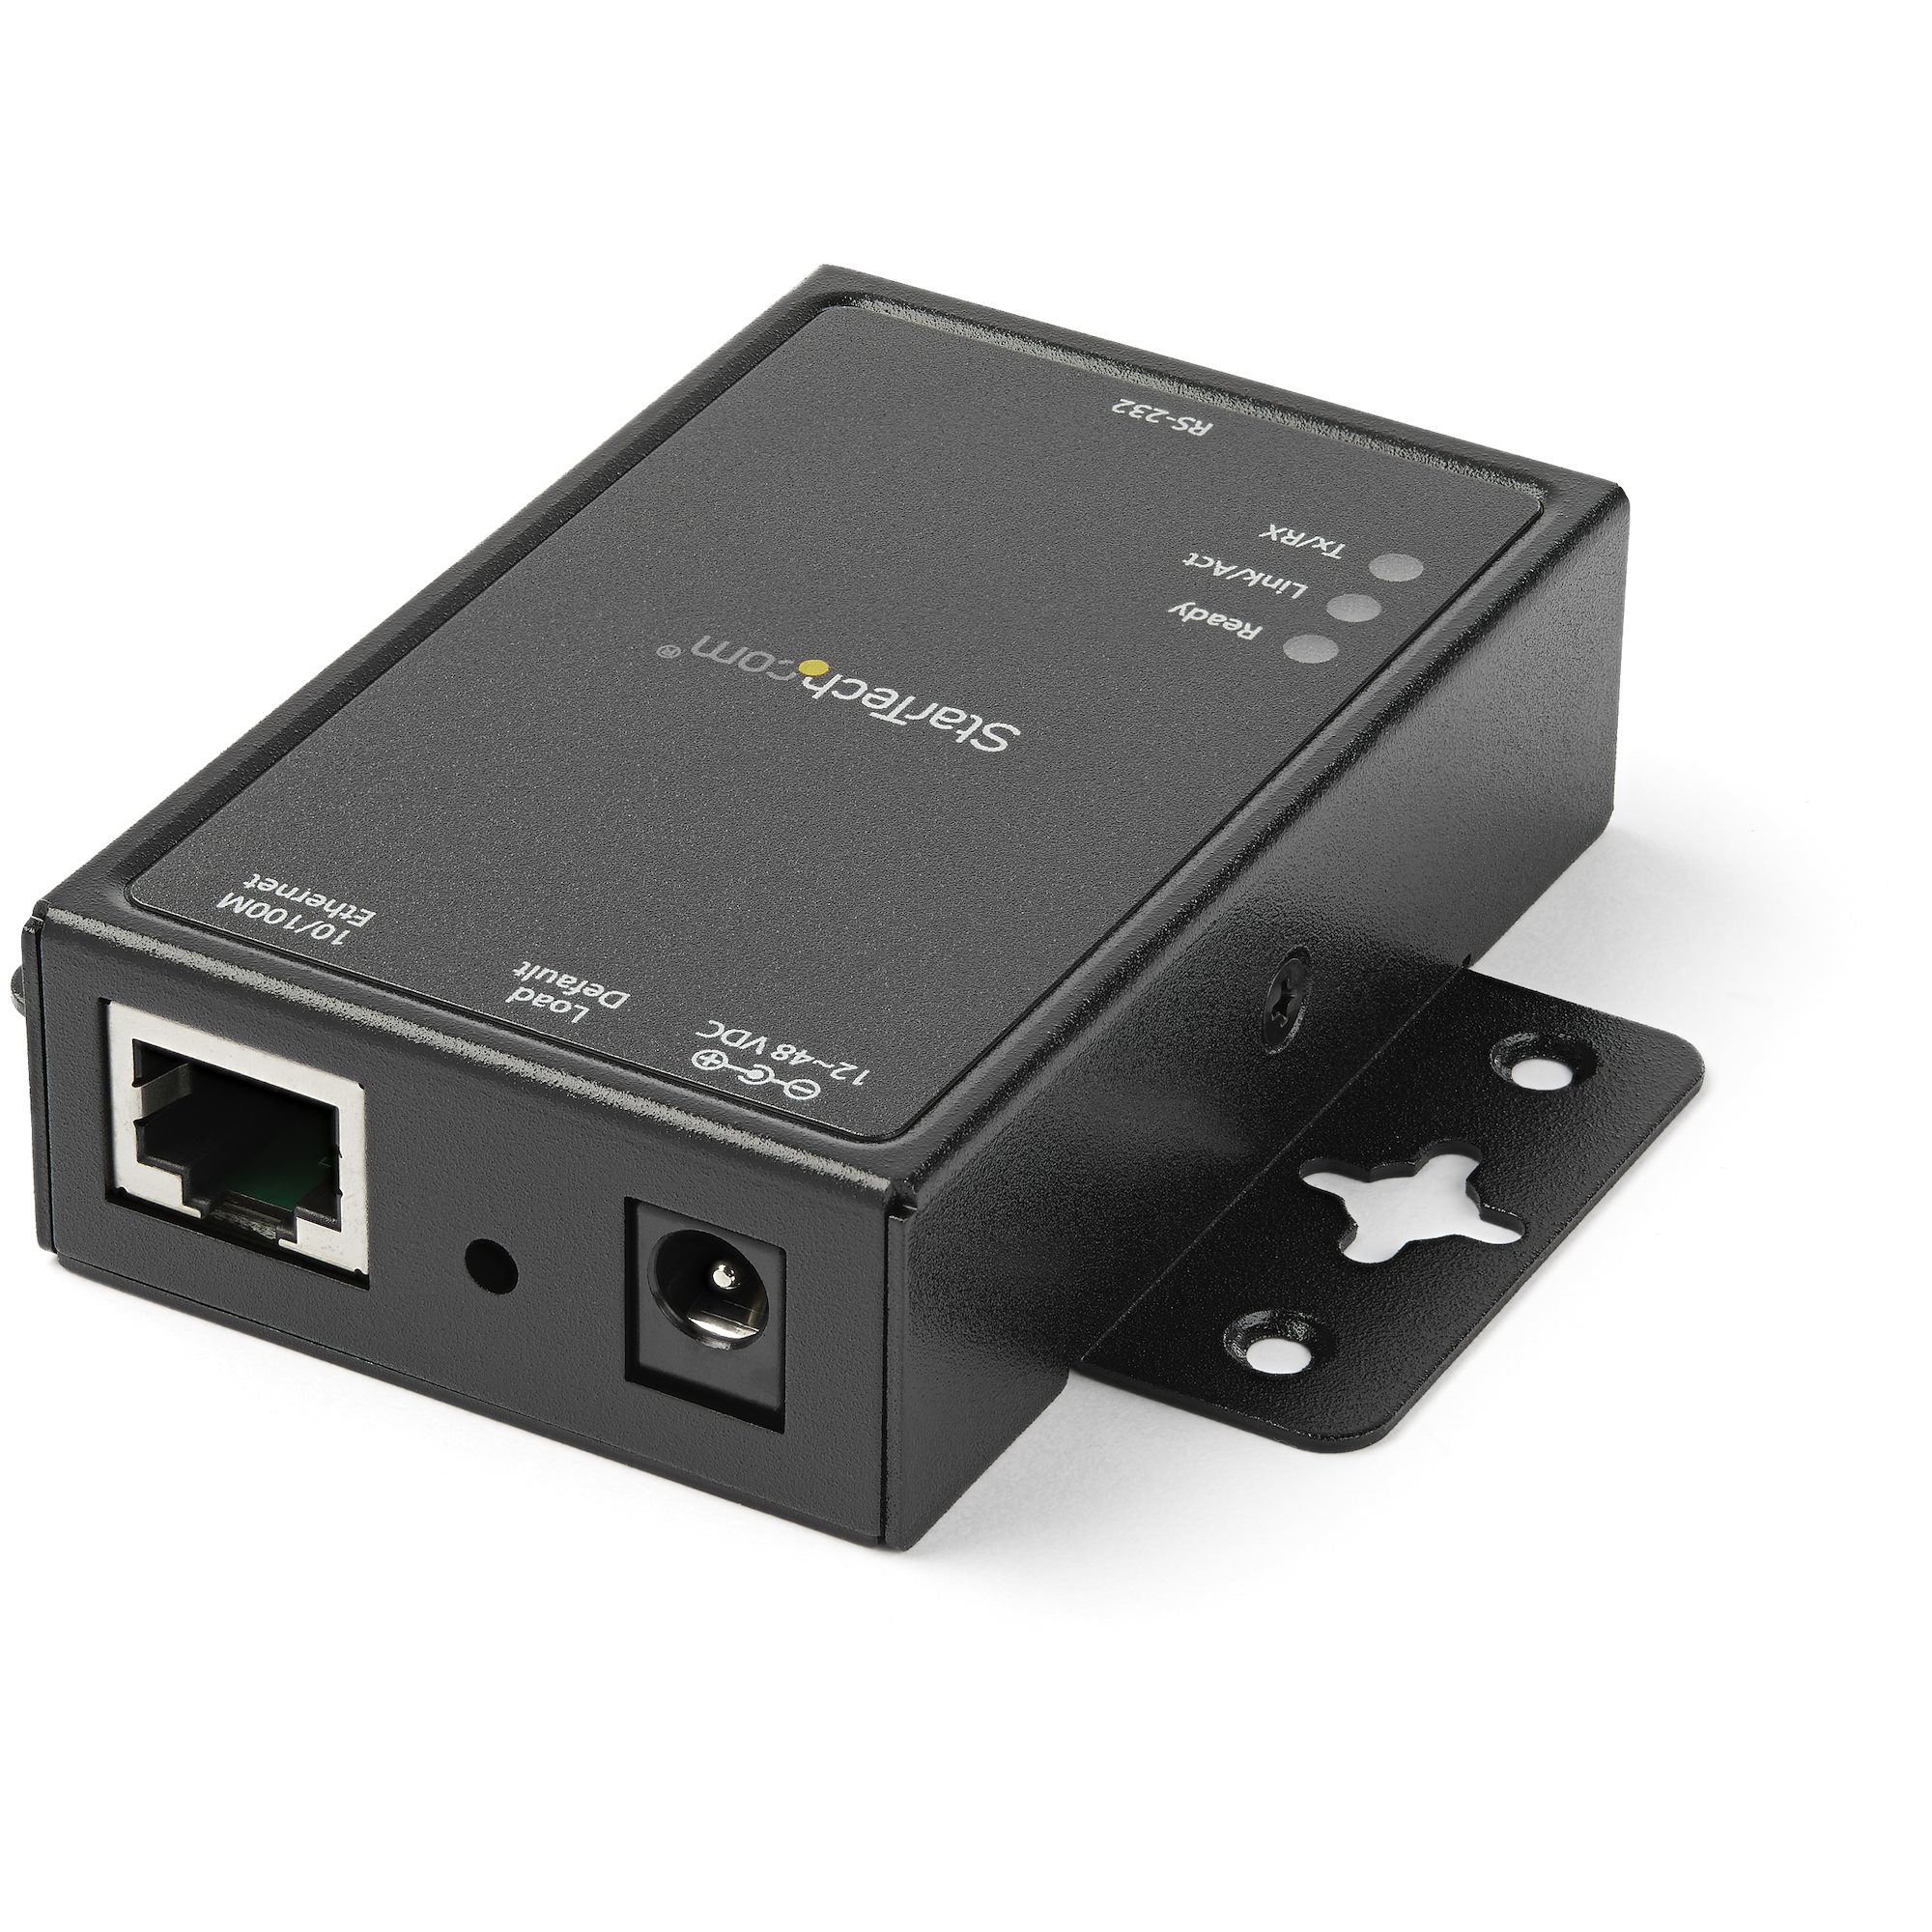 Servidor de Dispositivos IP de 1 Puerto Serie RS232 - Convertidor Serial Ethernet RJ45 Montaje DIN